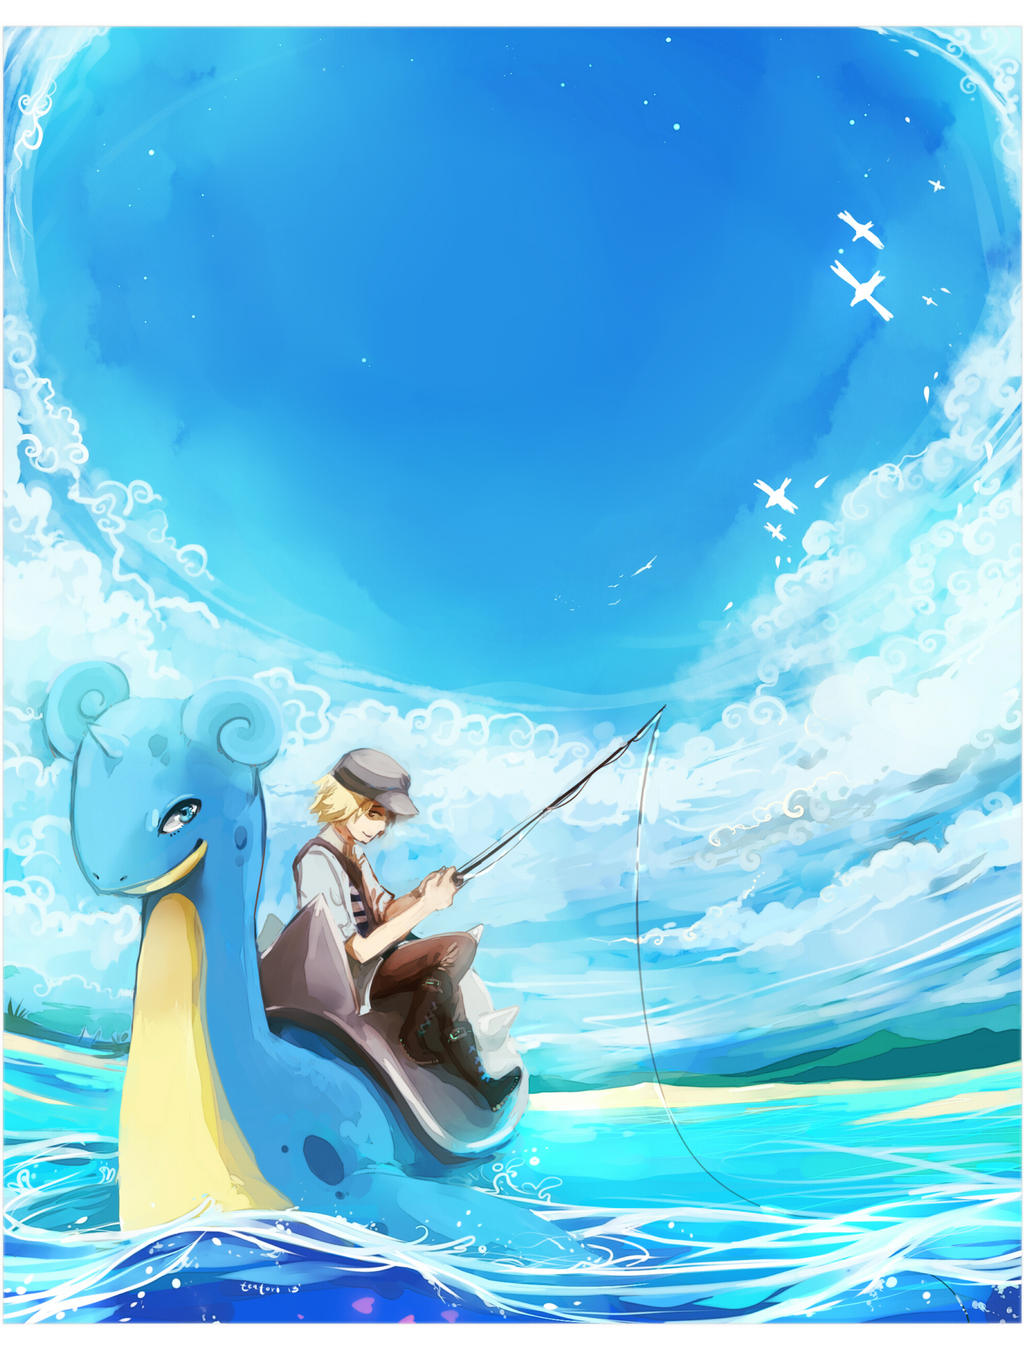 Surf! - Pokemon by tanaw on DeviantArt